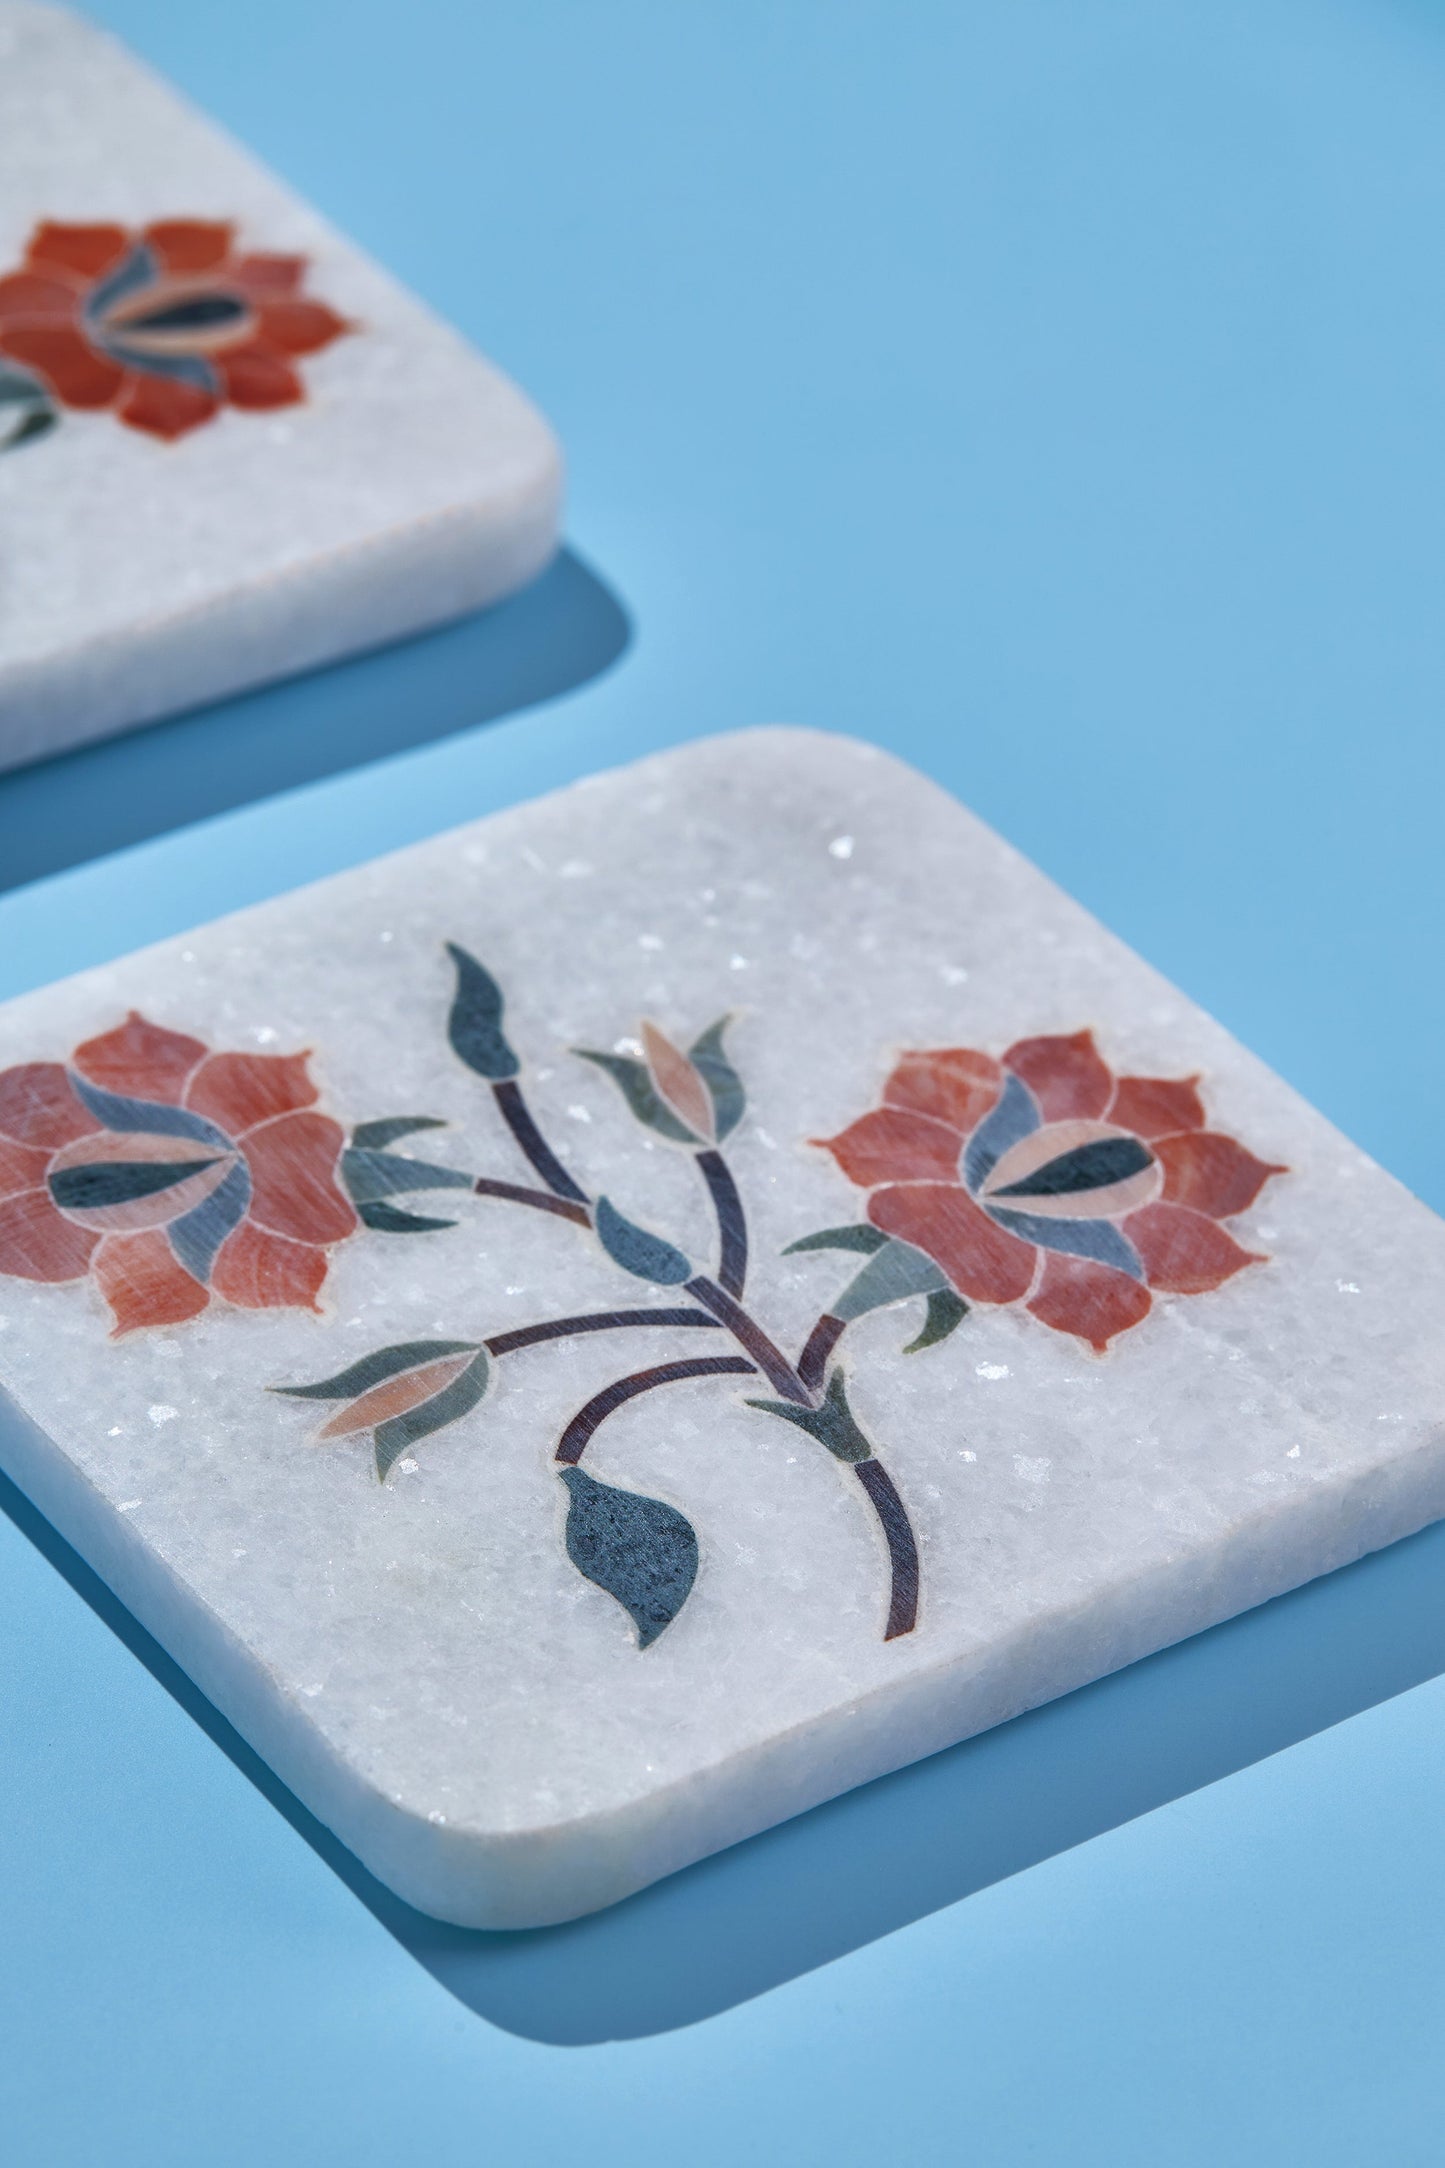 In Bloom Floral Marble Coasters, Set of 4